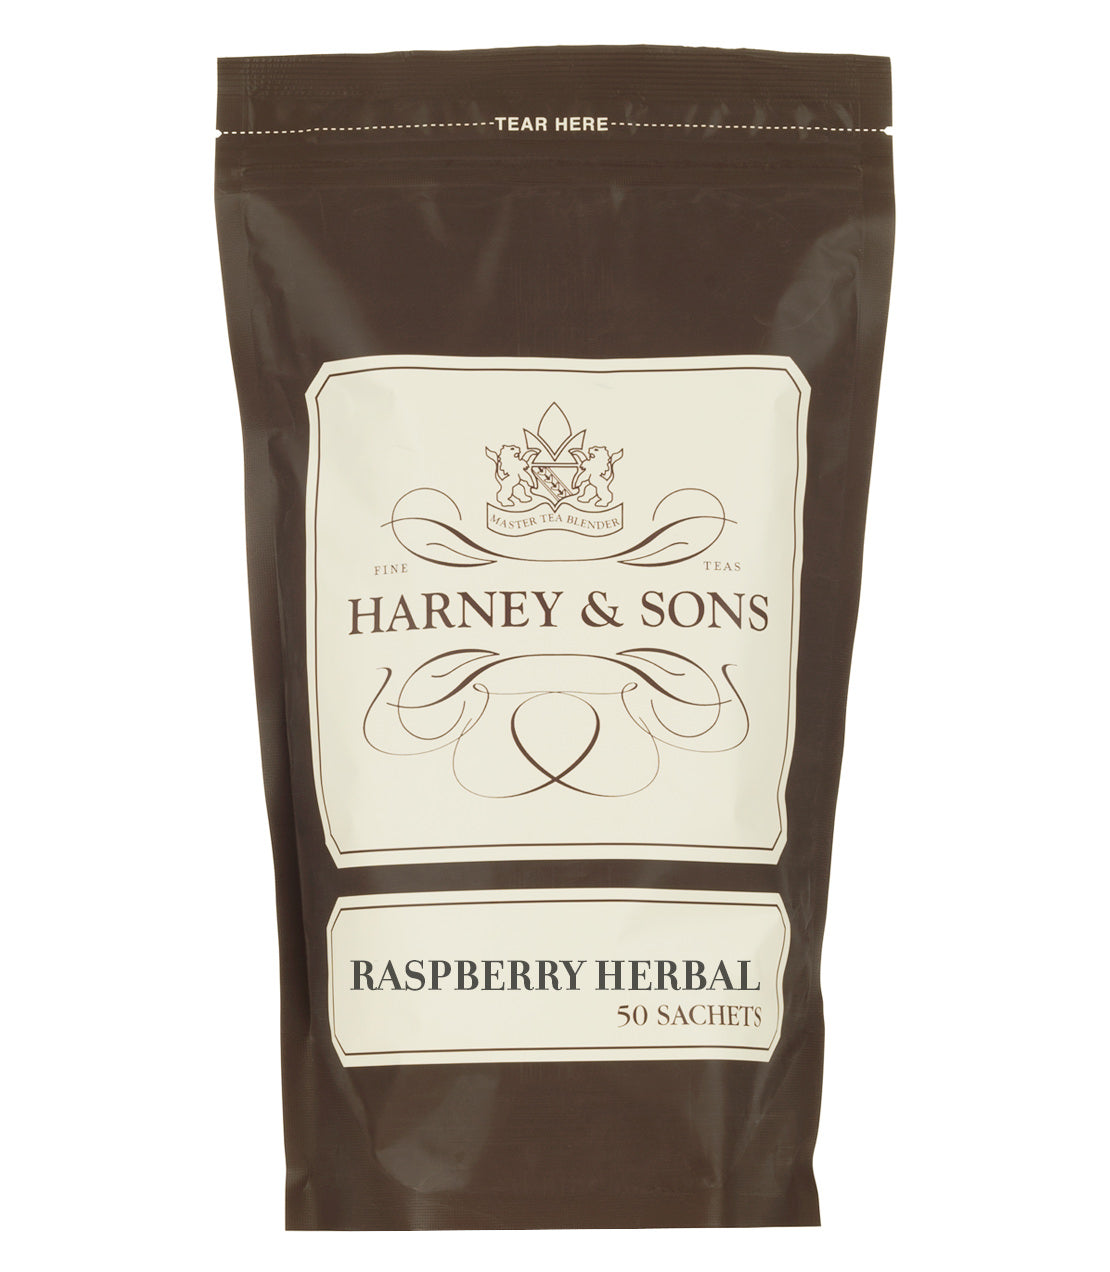 Raspberry Herbal - Sachets Bag of 50 Sachets - Harney & Sons Fine Teas